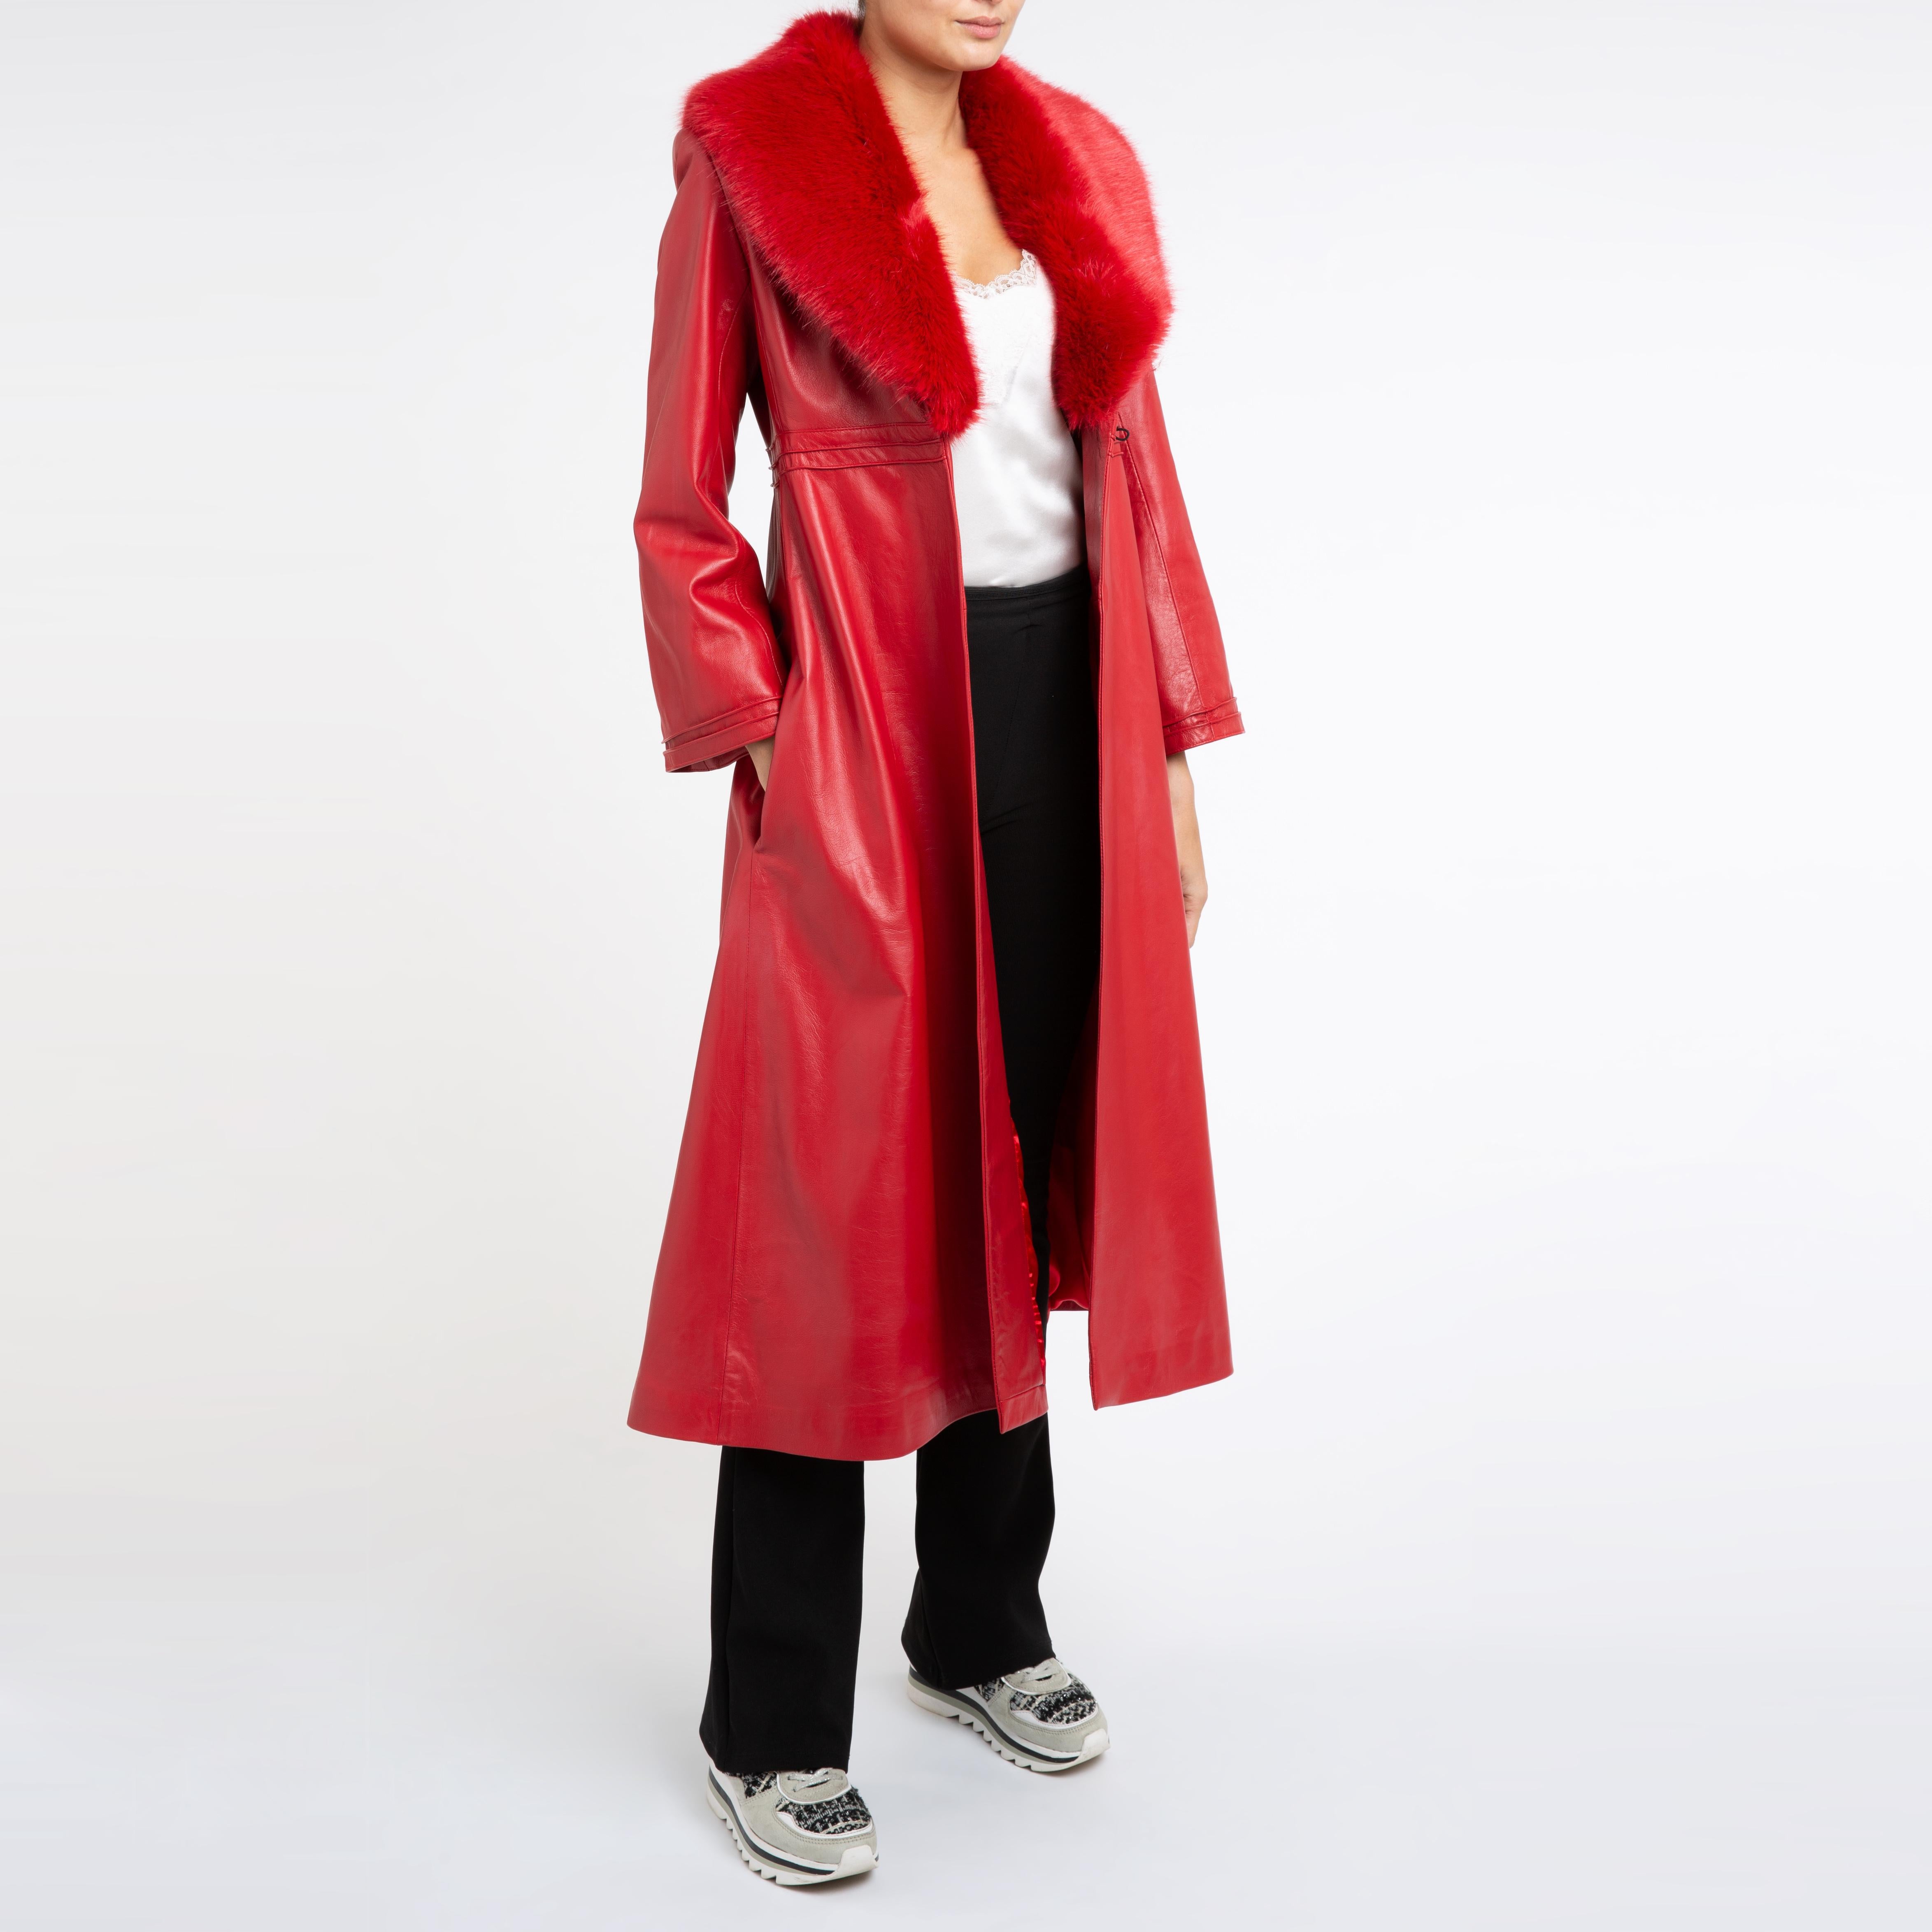 Verheyen London Edward Leather Coat with Faux Fur Collar in Red - Size uk 12 6